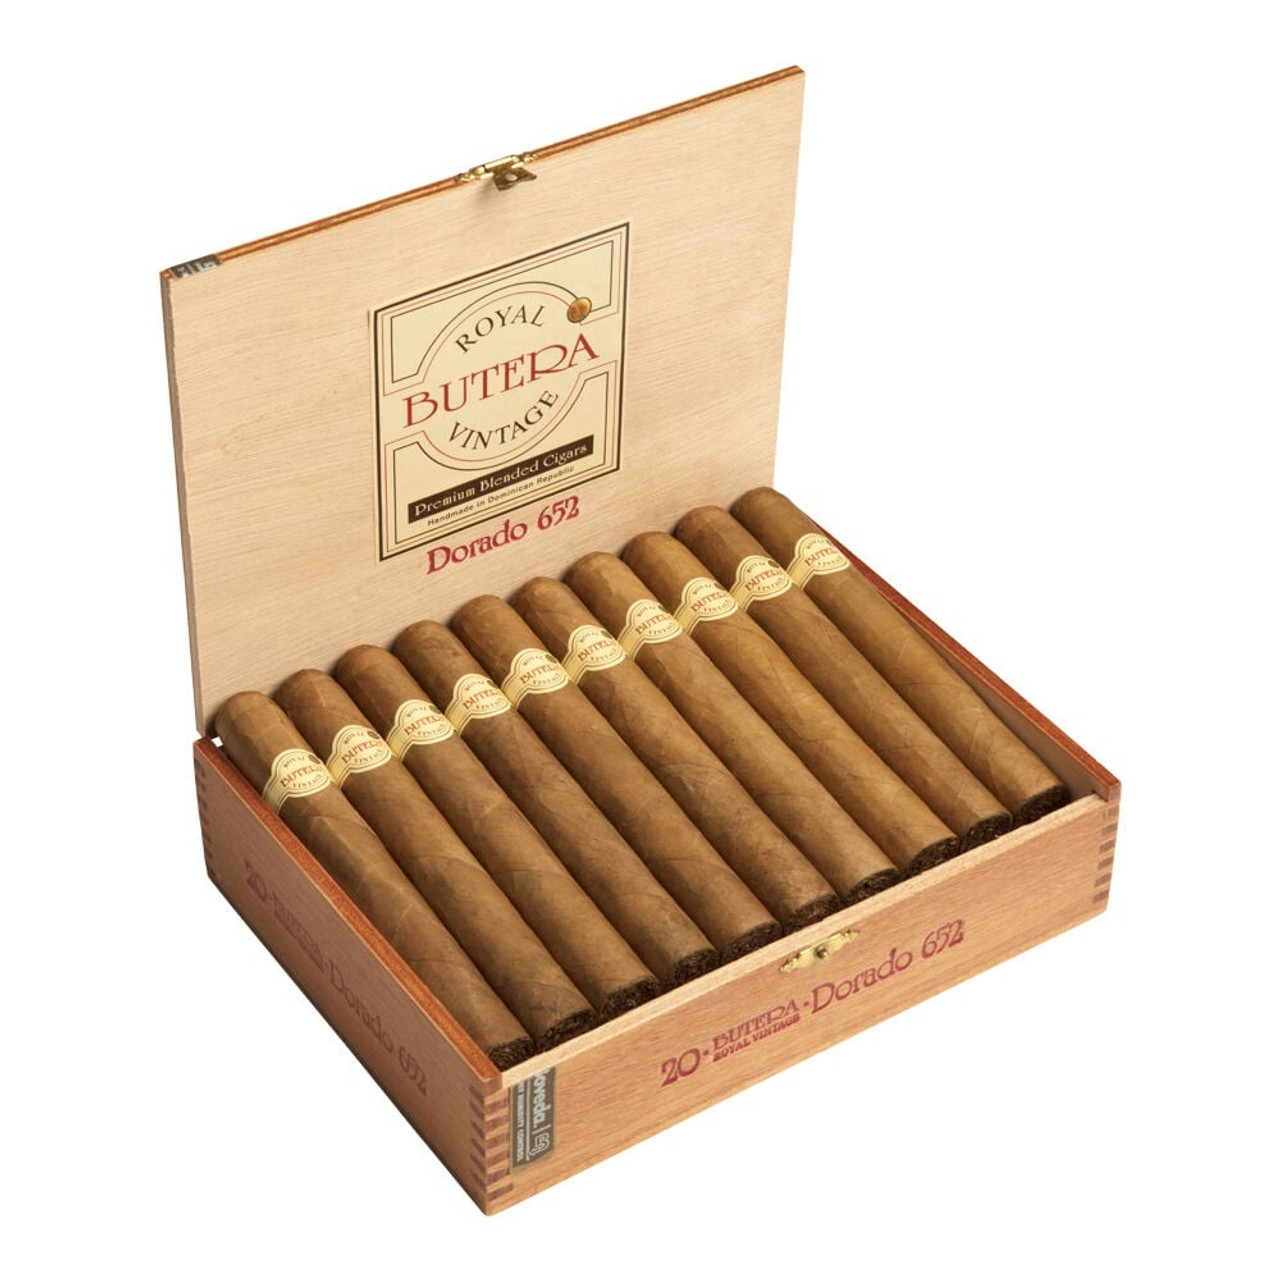 Butera Royal Vintage Poca Bella Cigars - 4 x 44 (Box of 20) Open